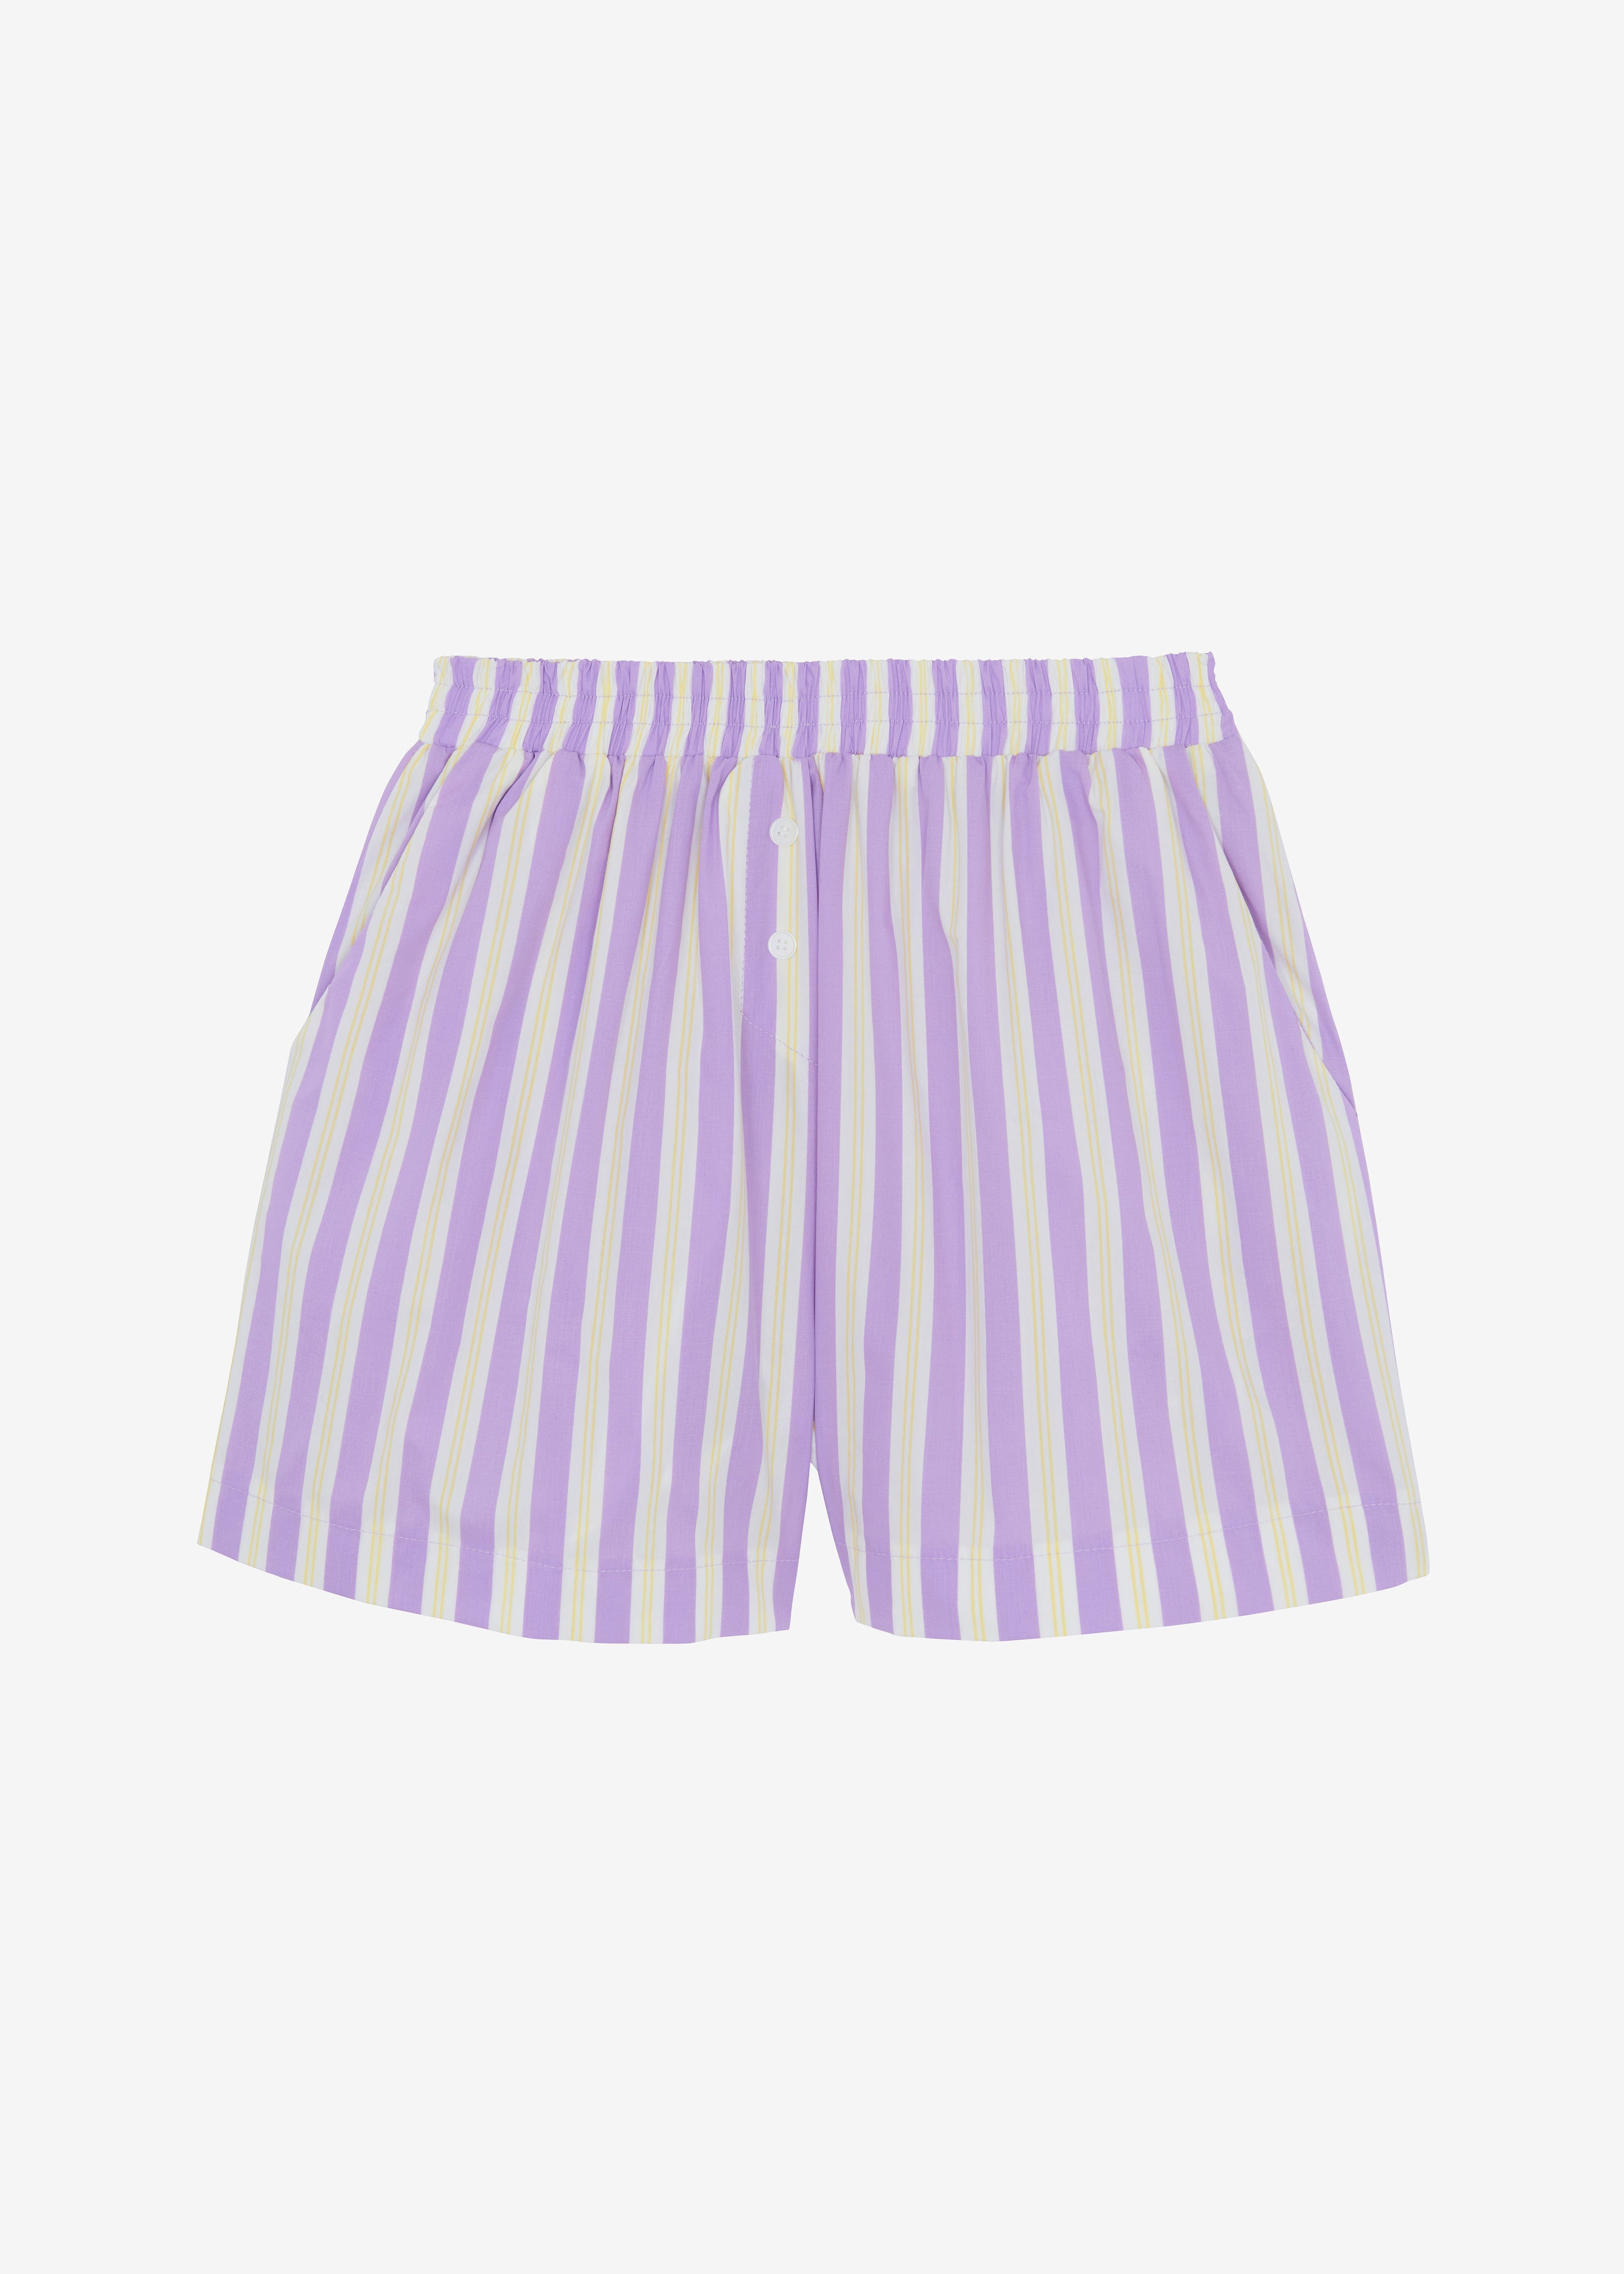 Juno Boxer Shorts - Violet Stripe - 7